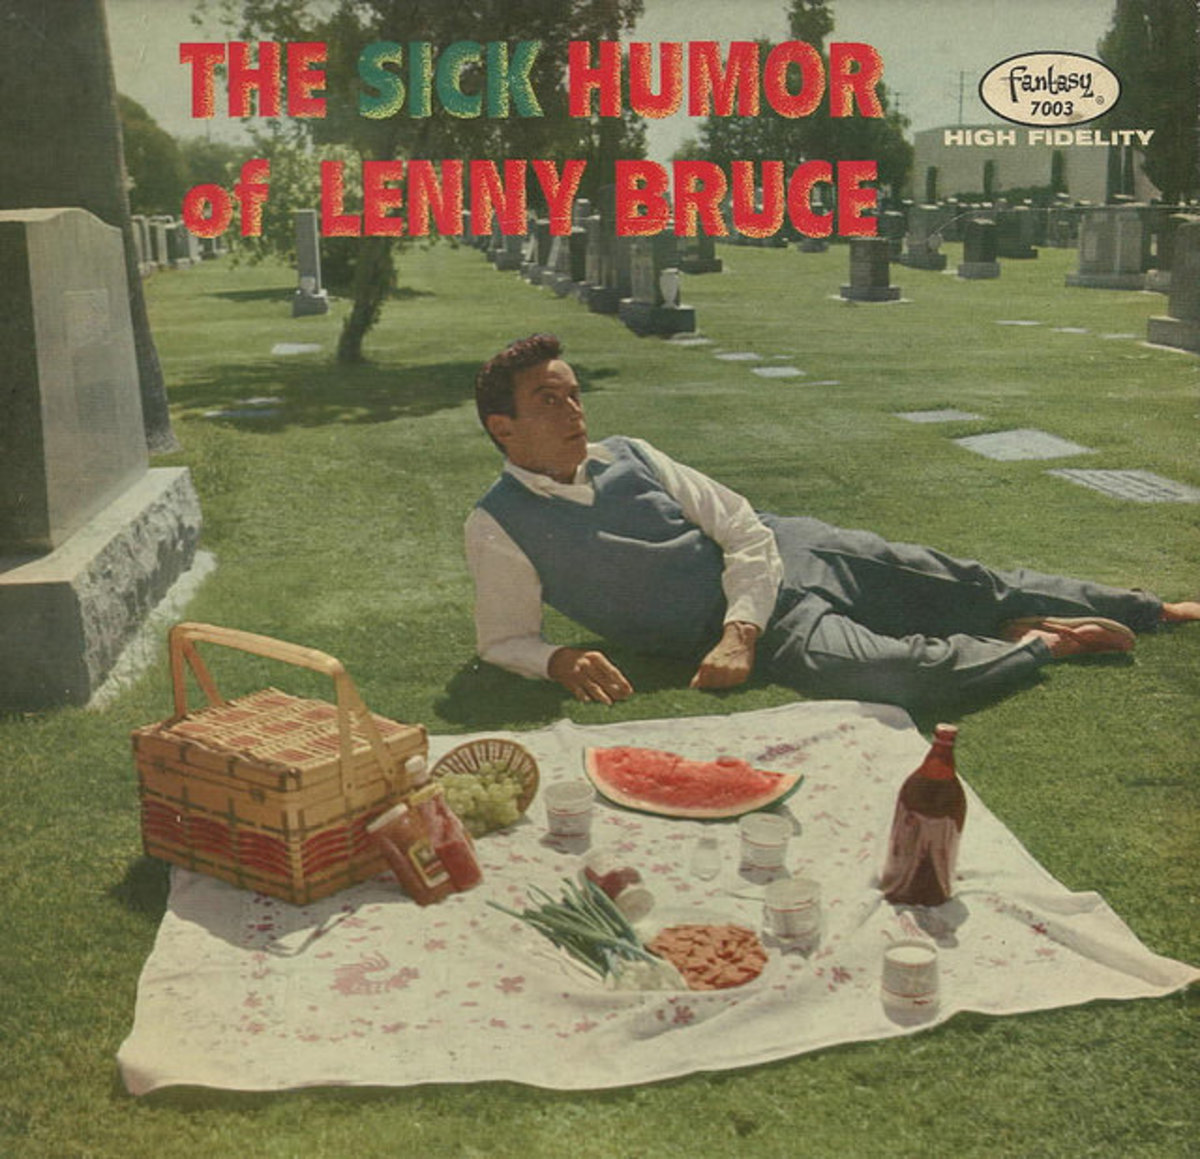 Lenny Bruce "The Sick Humor of Lenny Bruce" Fantasy Record 7003 12" LP Red Vinyl Record